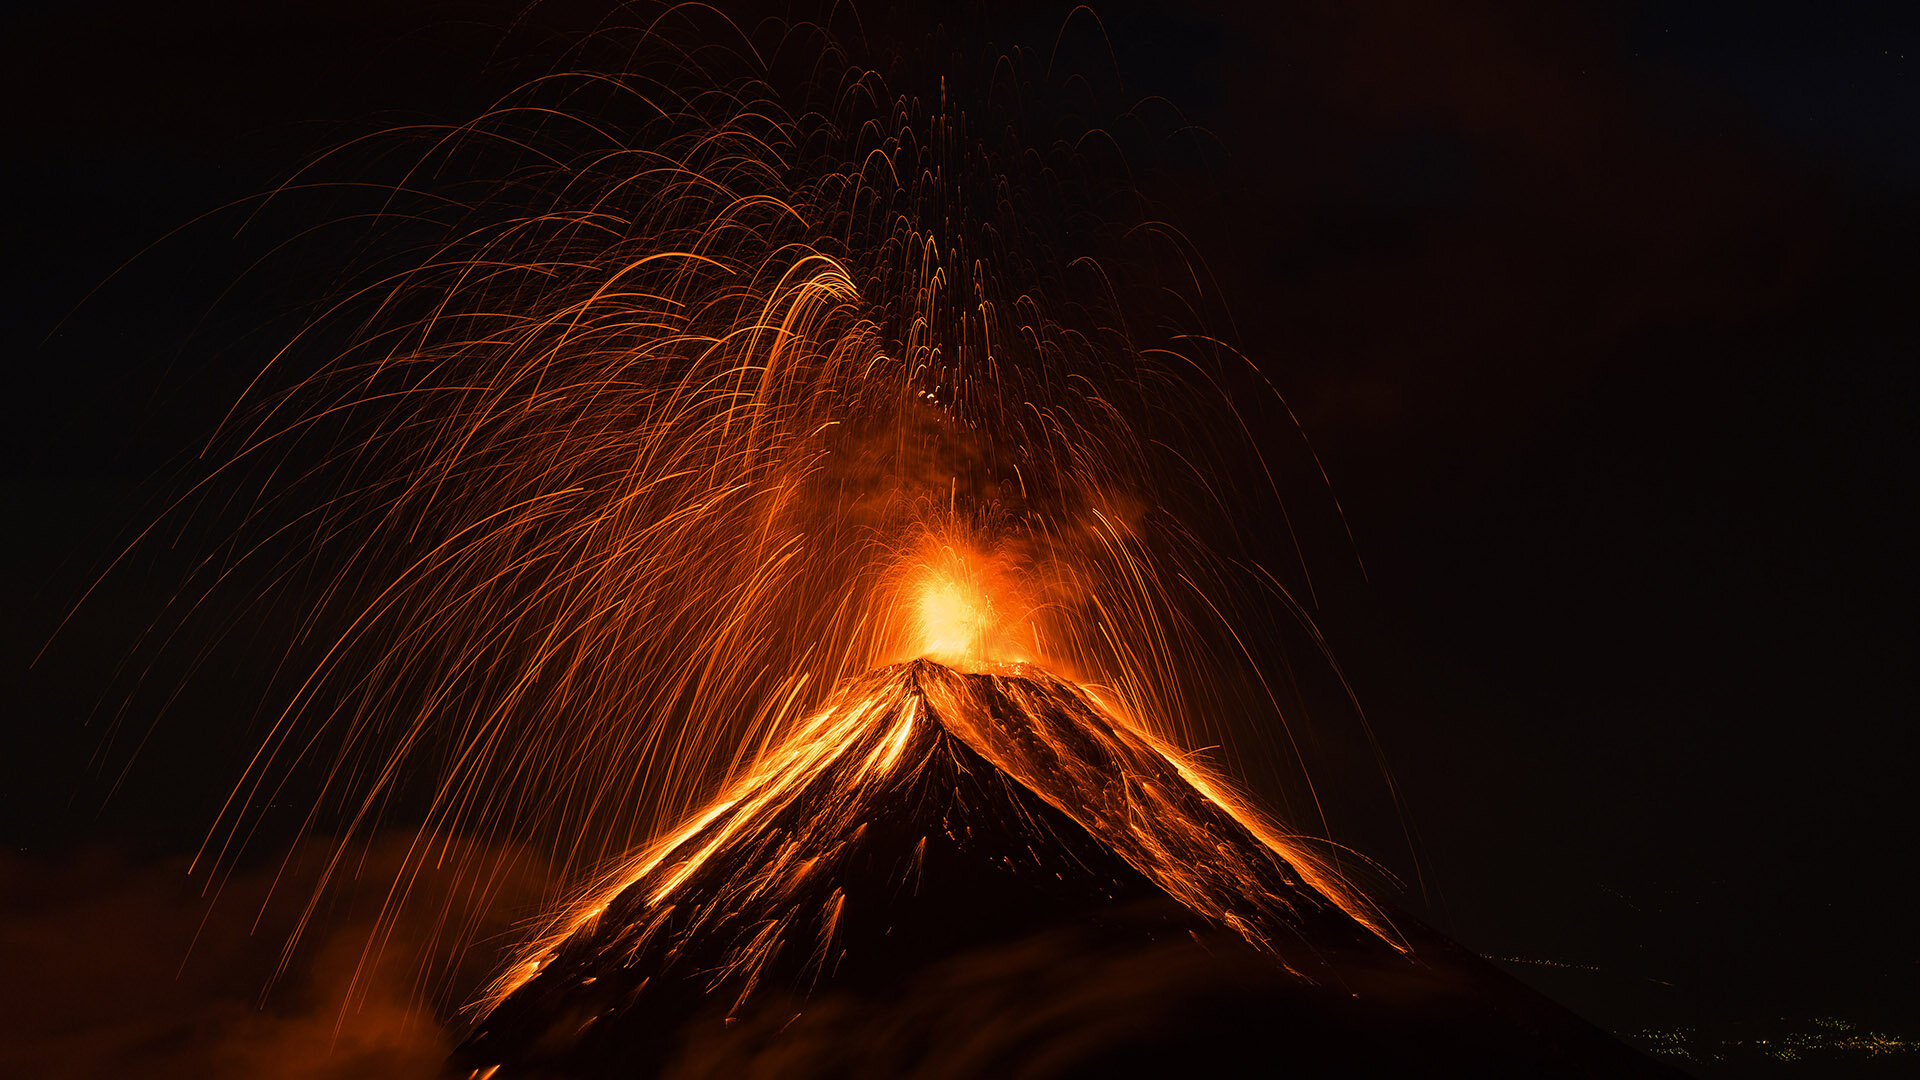 Fuego volcano erupting @diegorizzophoto @nikon.jpg